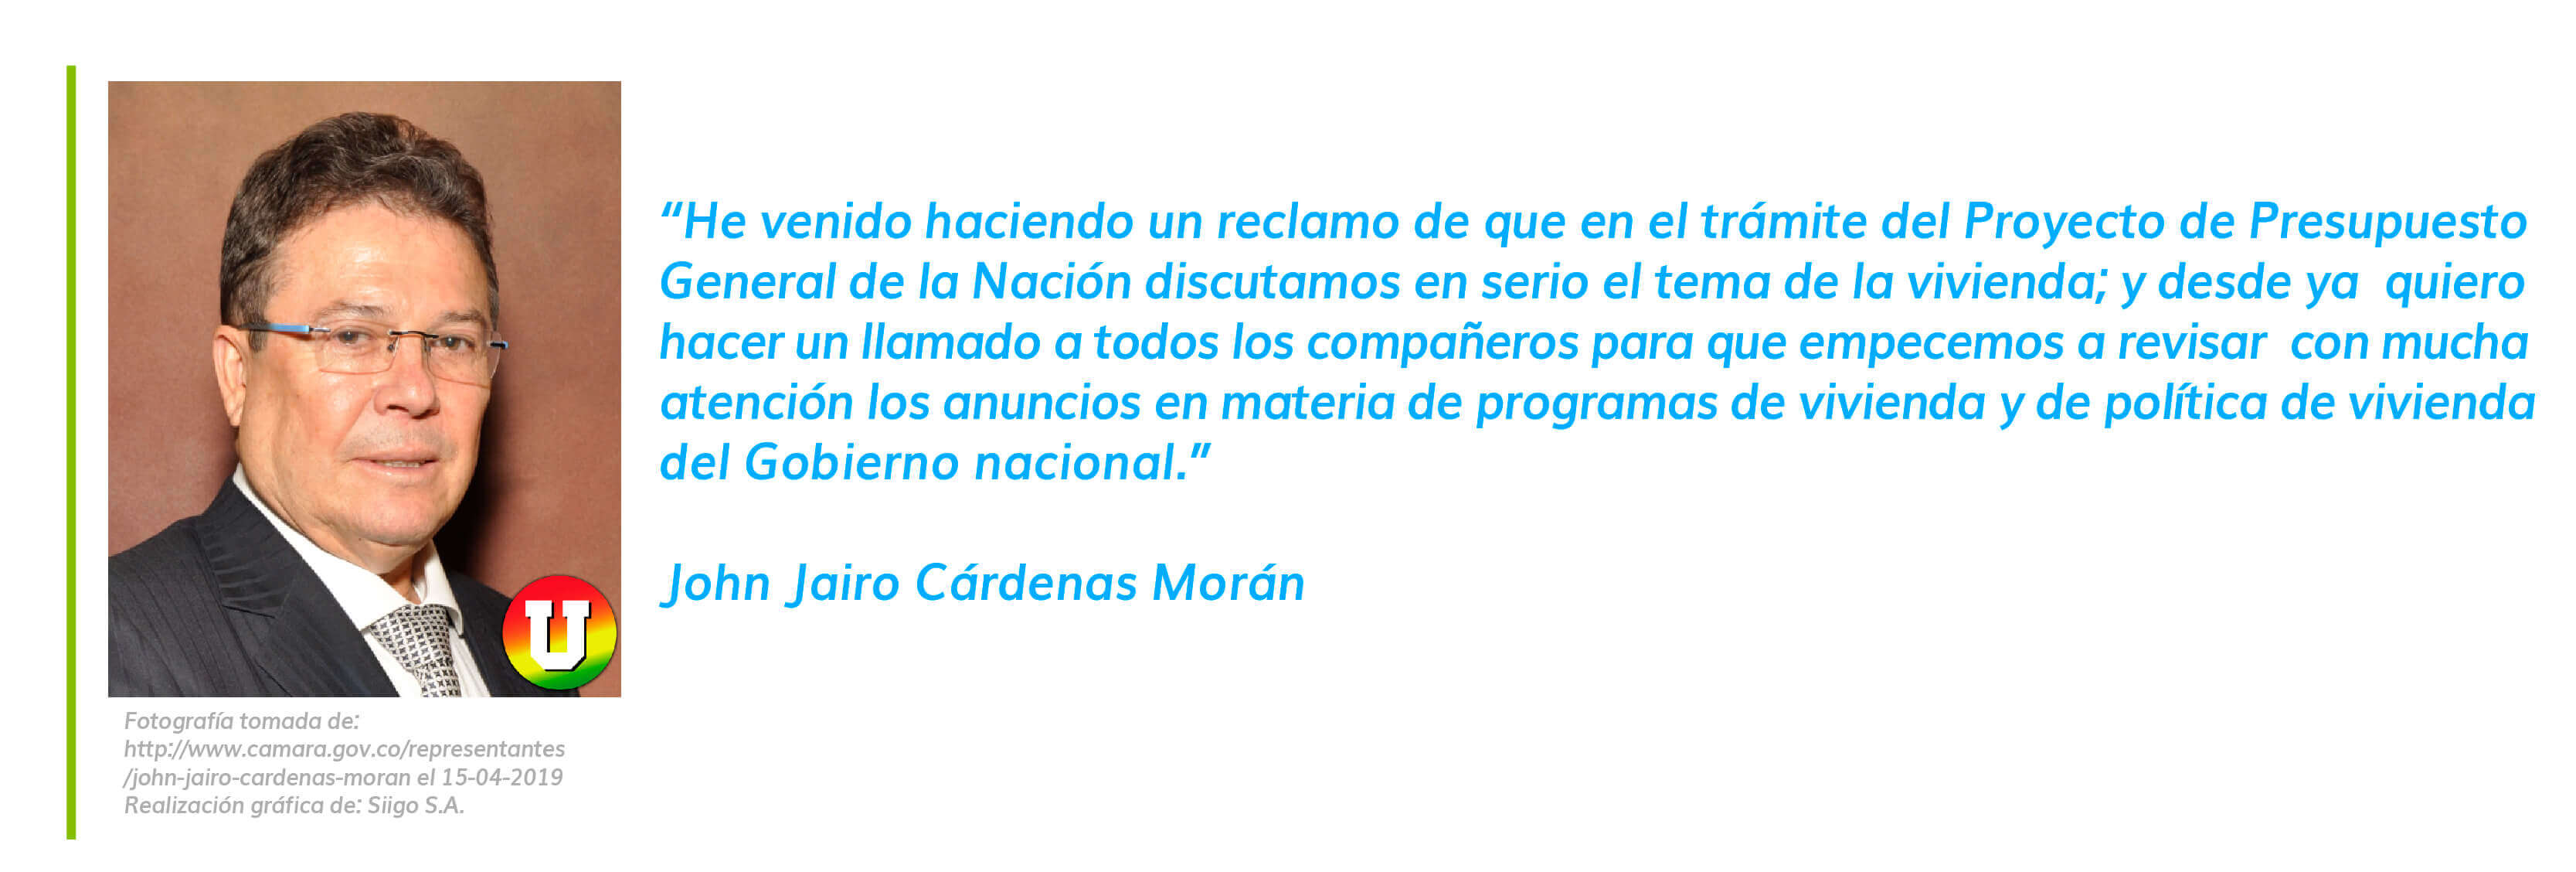 John Jairo Cardenas Moran 2019